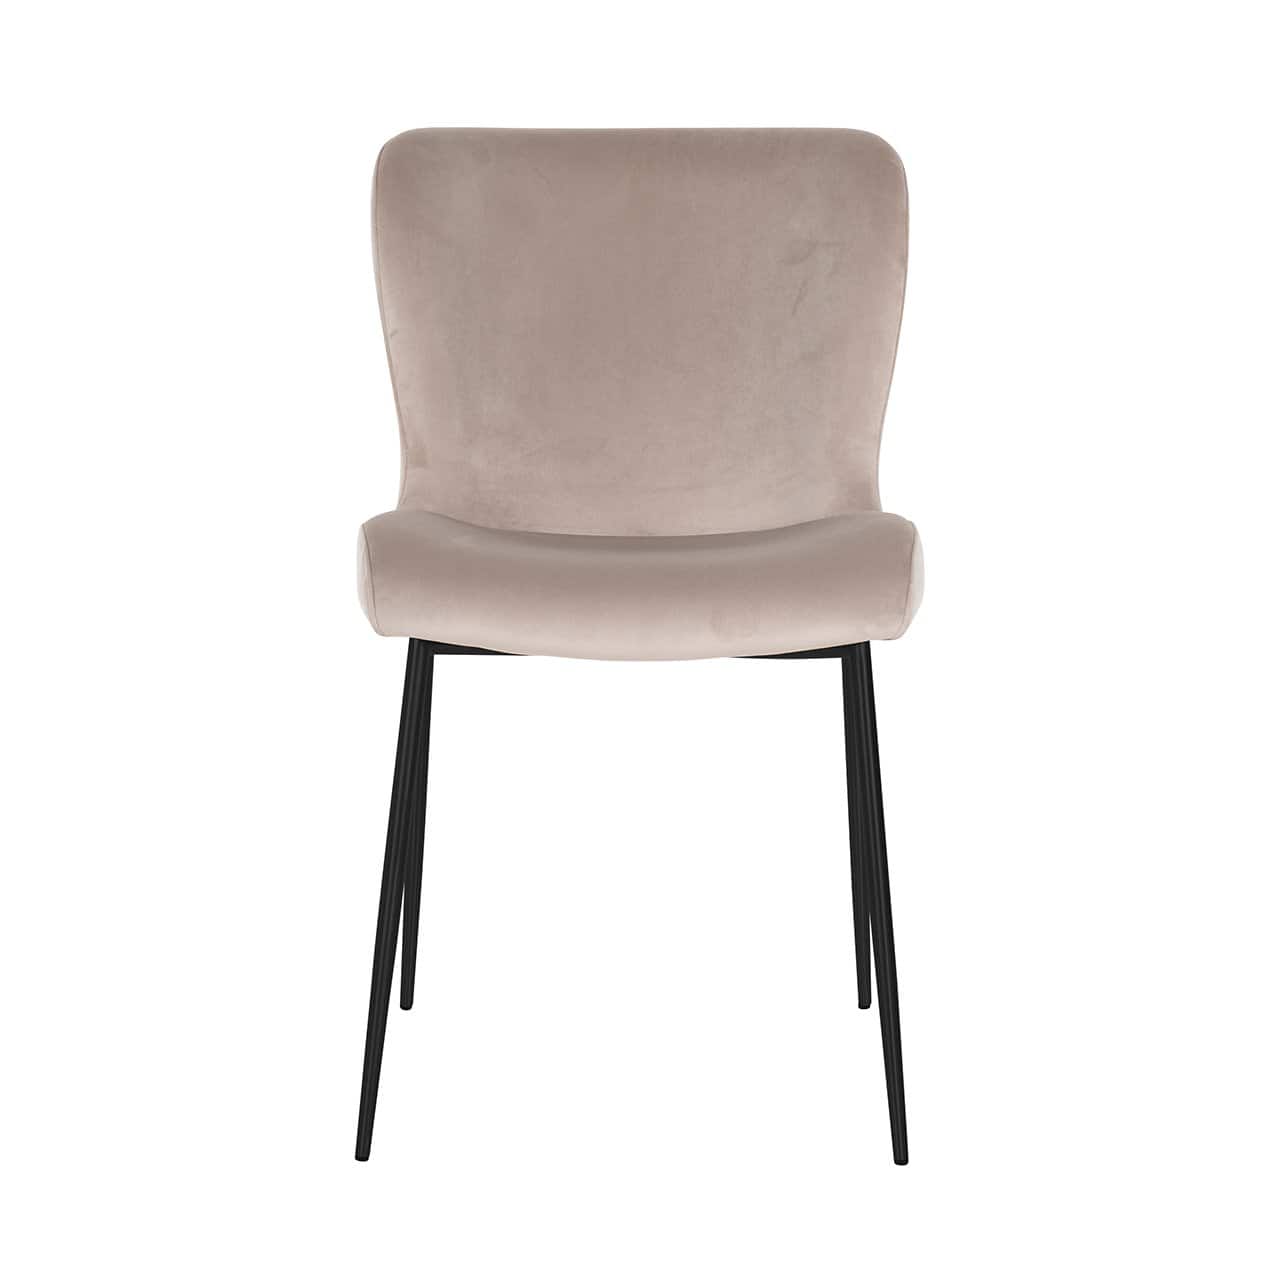 Chair Darby khaki / black fire retardant (FR-Quartz 903 Khaki)